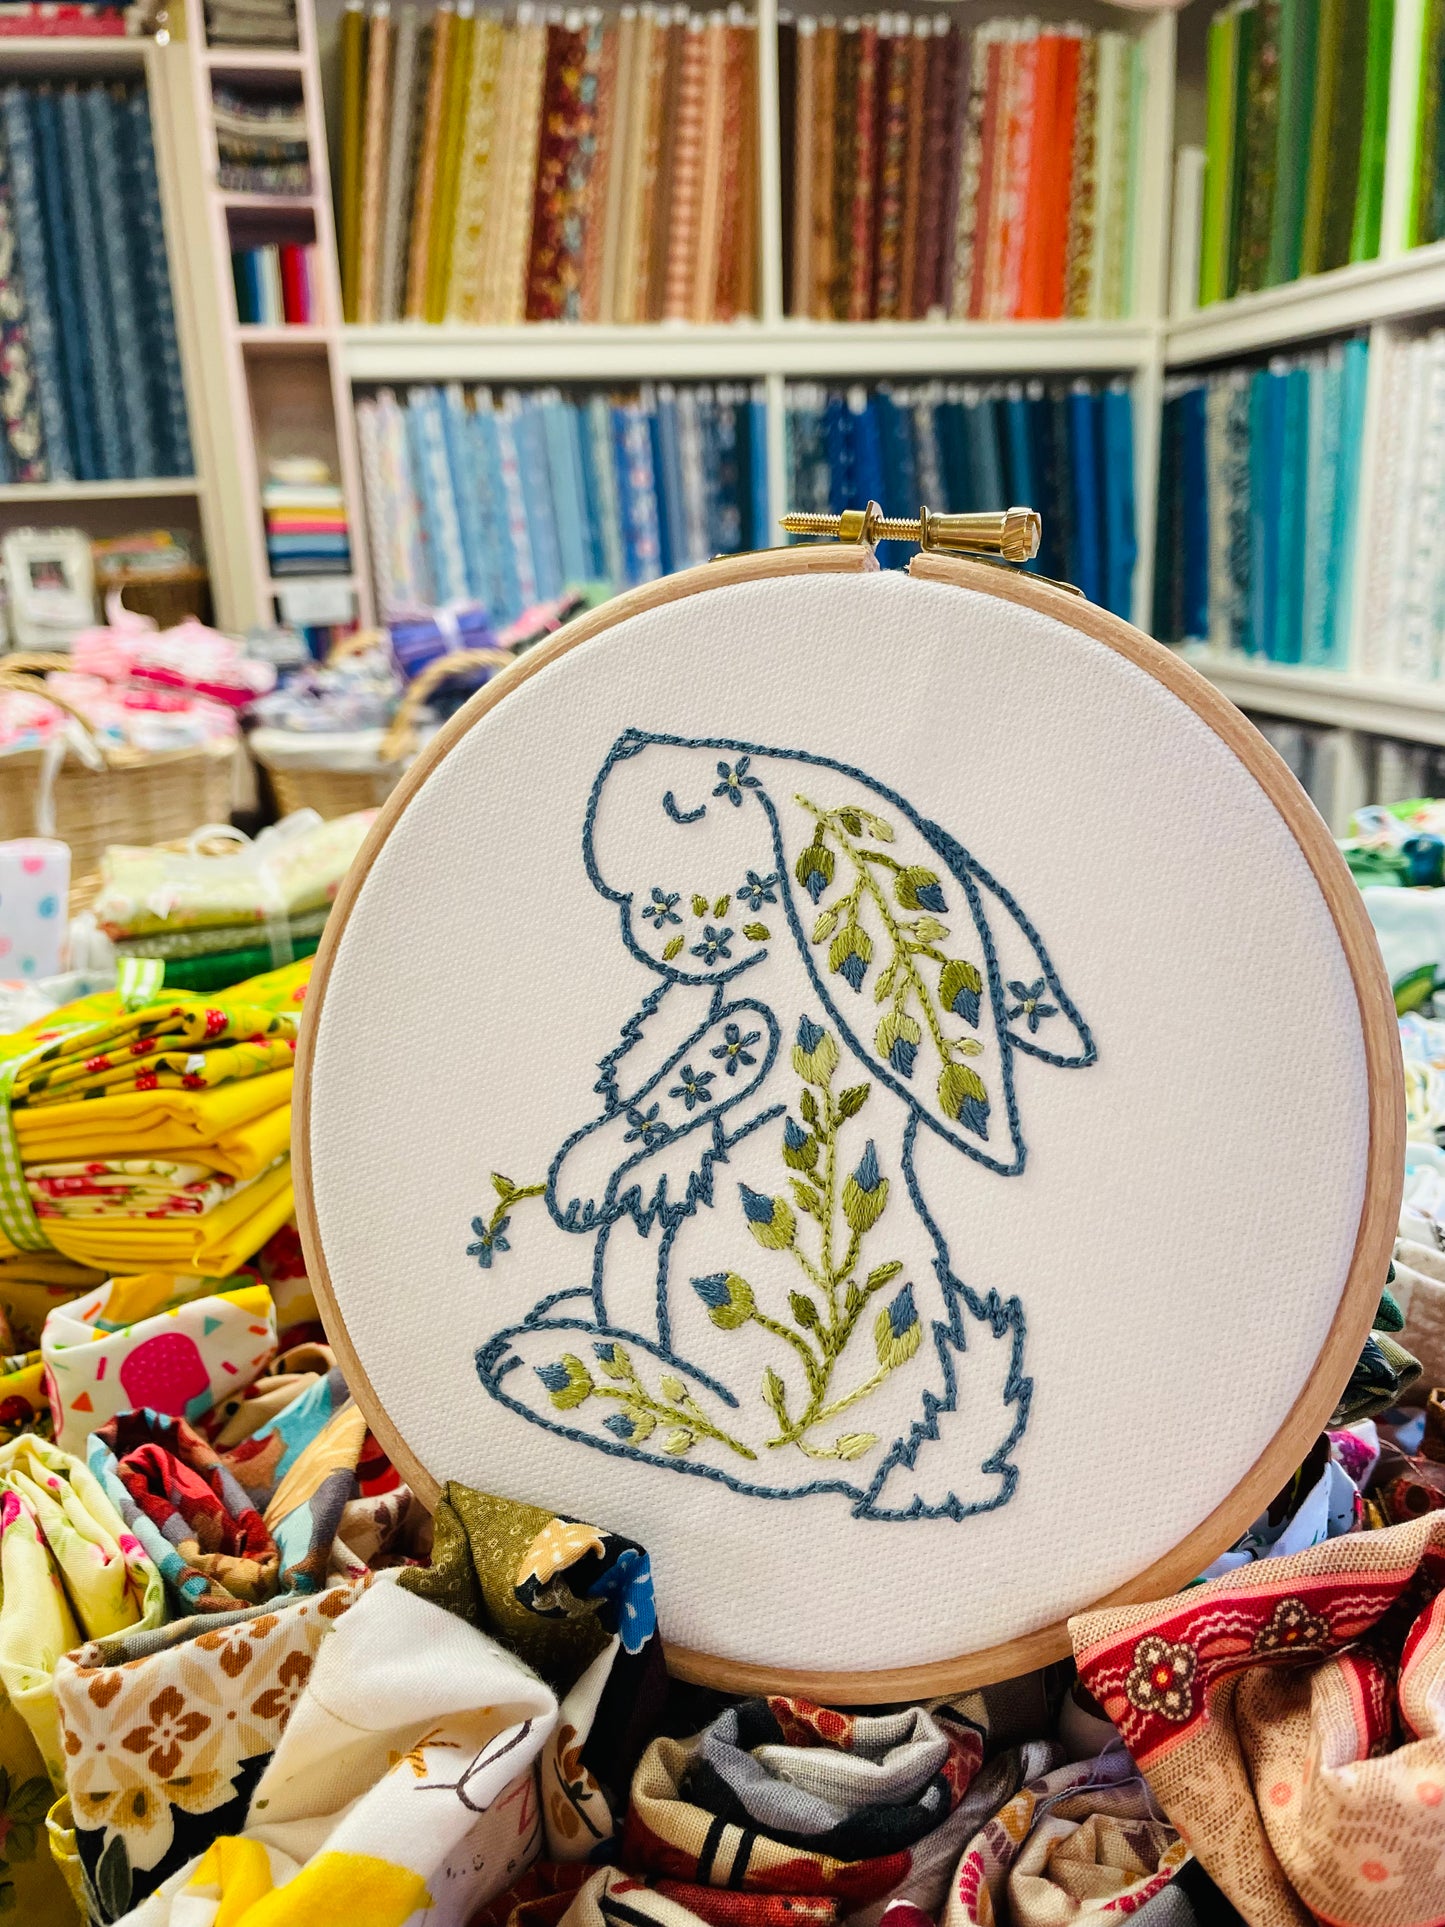 Basil The Bunny - Fabulous Embroidery Kit